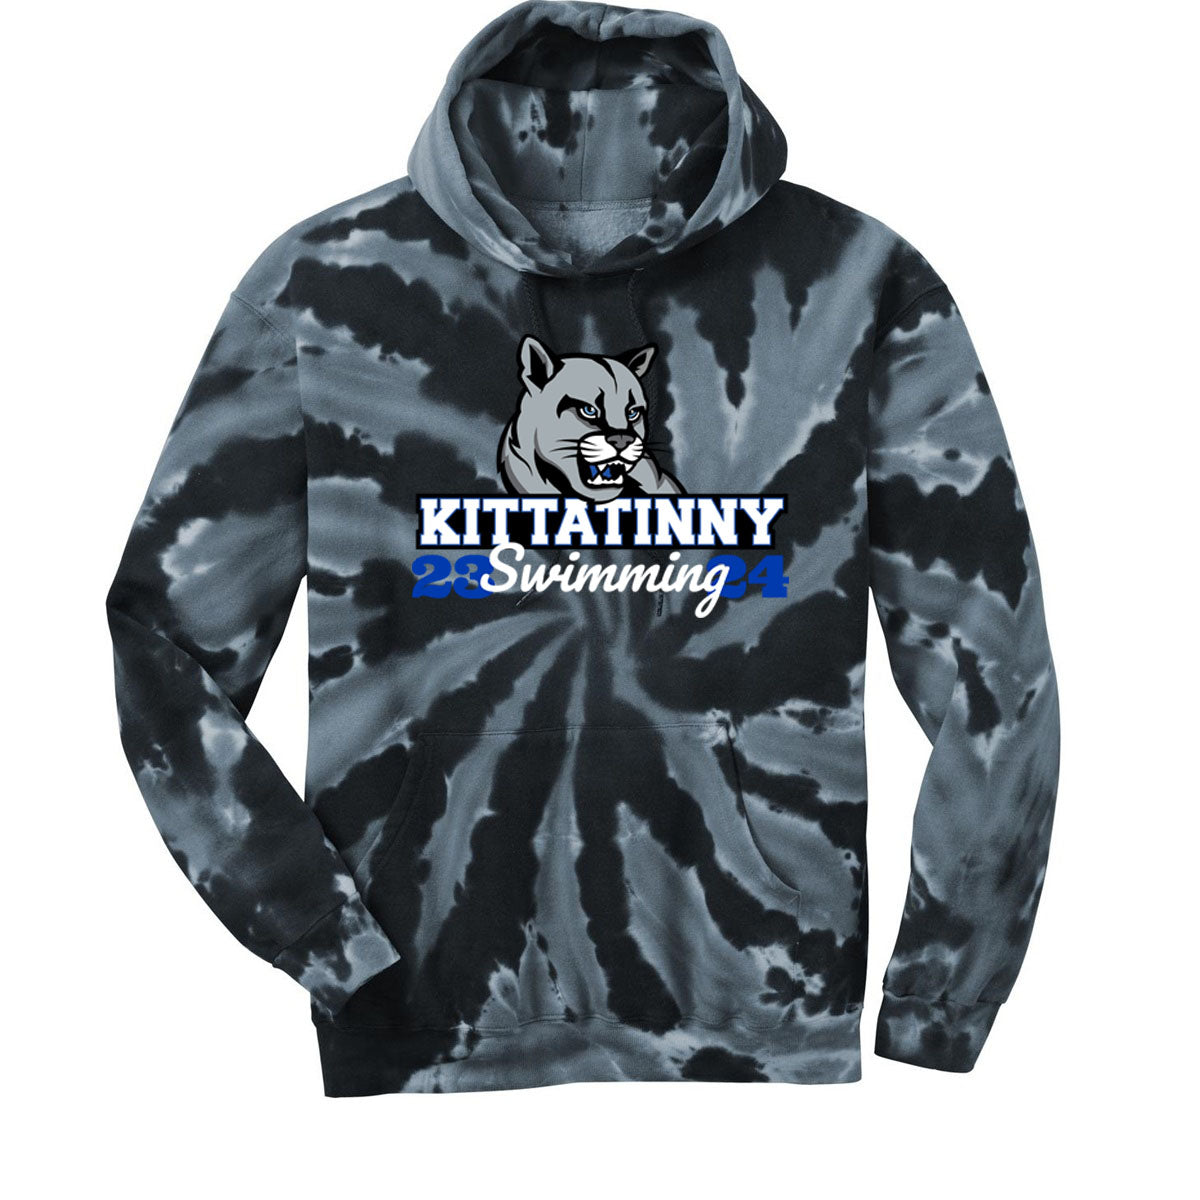 Kittatinny Swimming Tie-Dye Hooded Sweatshirt Design 2